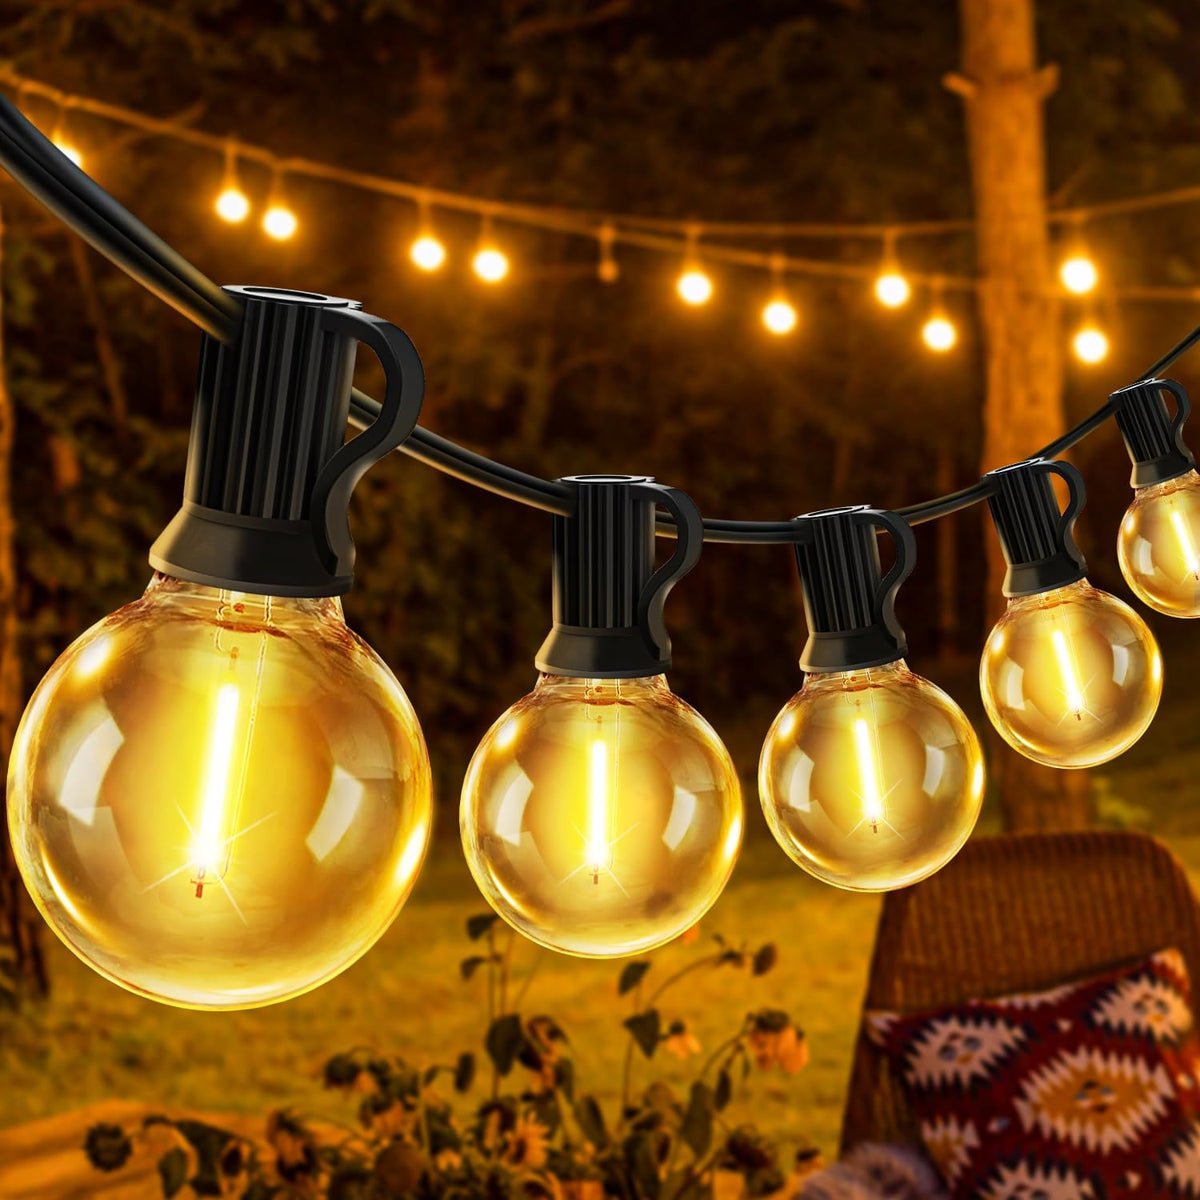 Festoon String Outdoor Garden Lights - 30M 100ft G40 Outside Electric Light Mains Powered Shatterproof LED Bulb Waterproof Lighting for Outside Patio